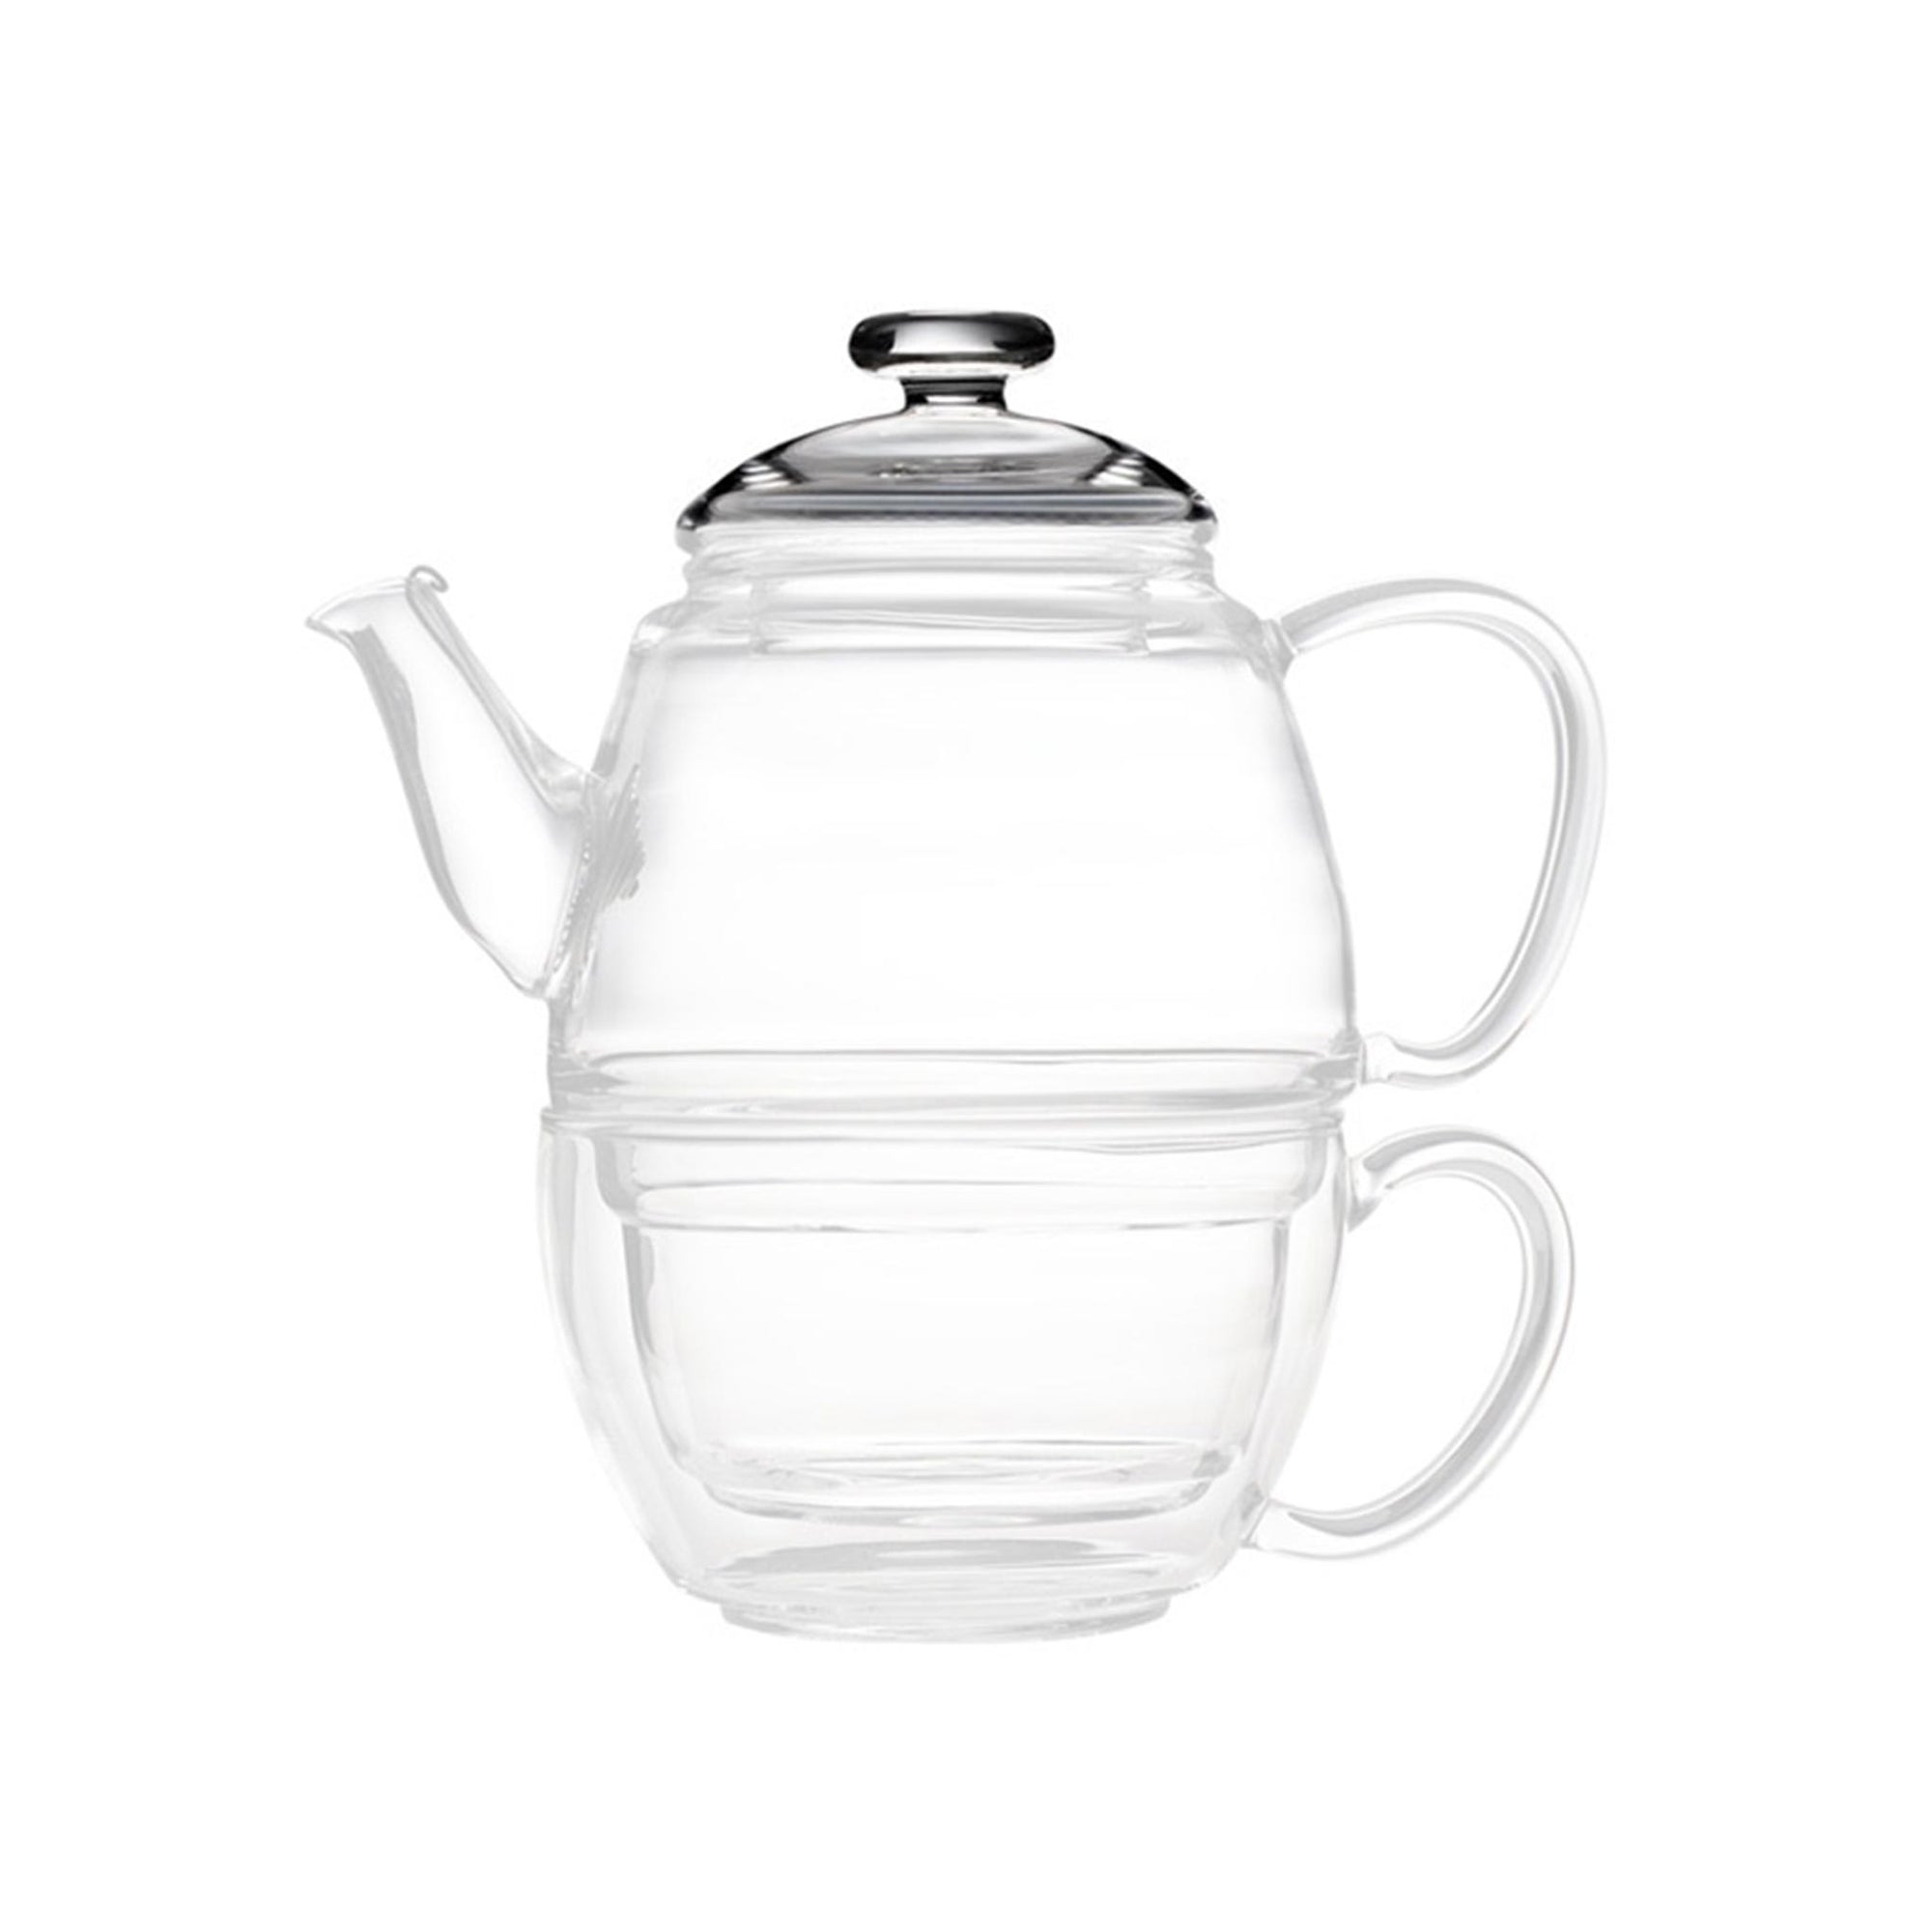 Teapot lid for Teaposy charme teapot